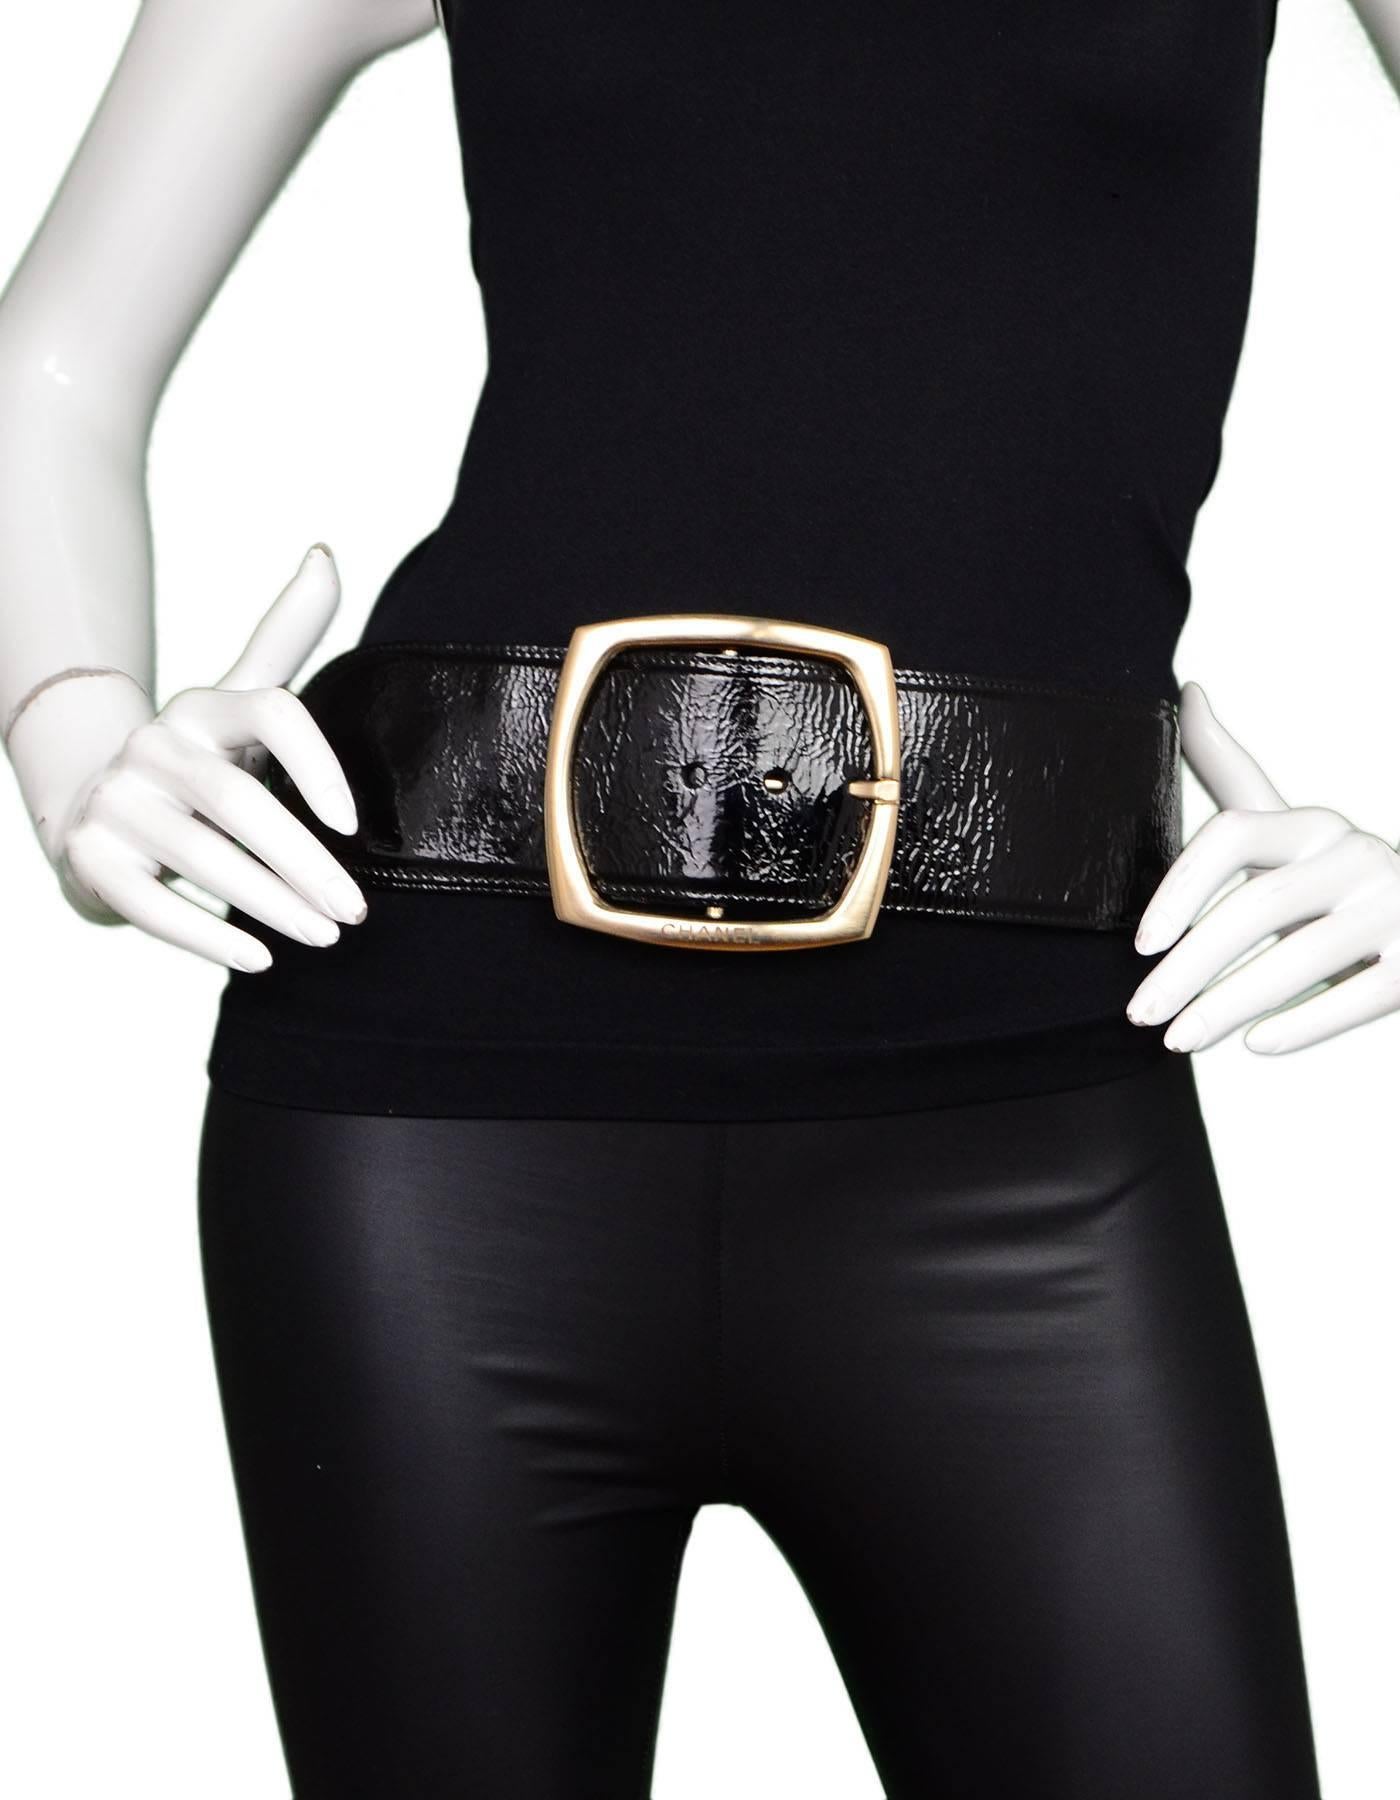 wide black patent leather belt